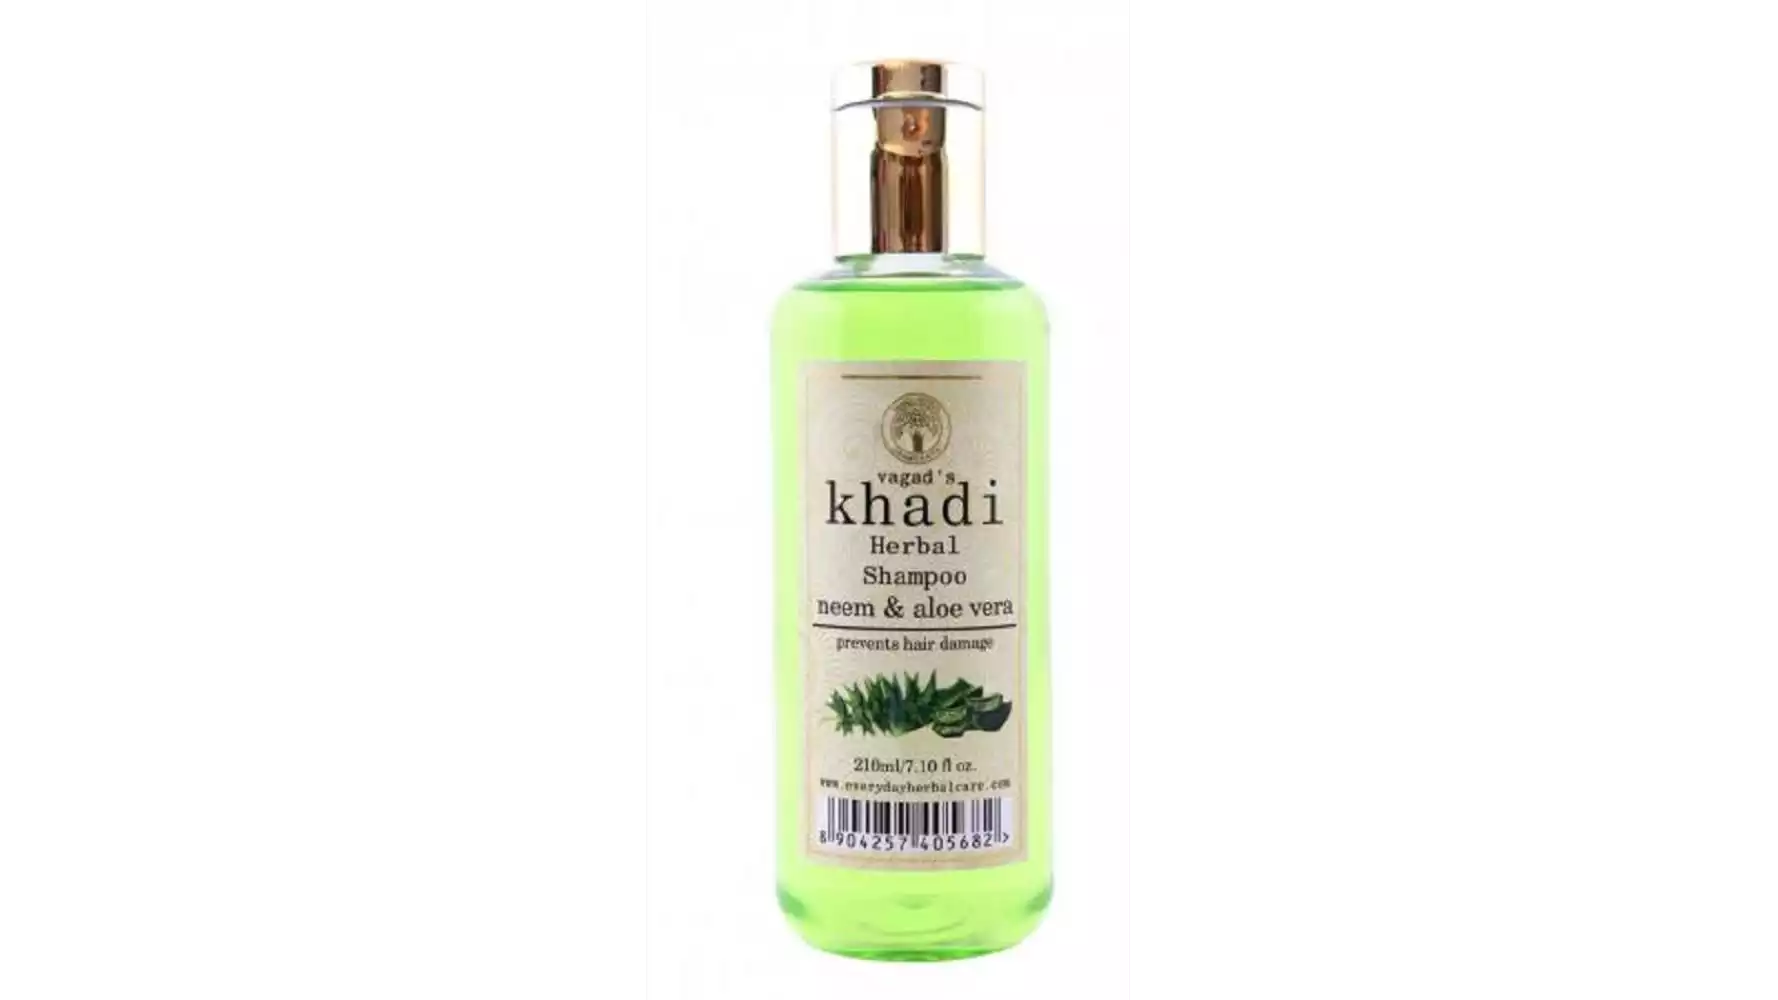 Vagads Khadi Neem & Aloevera Shampoo (210ml)